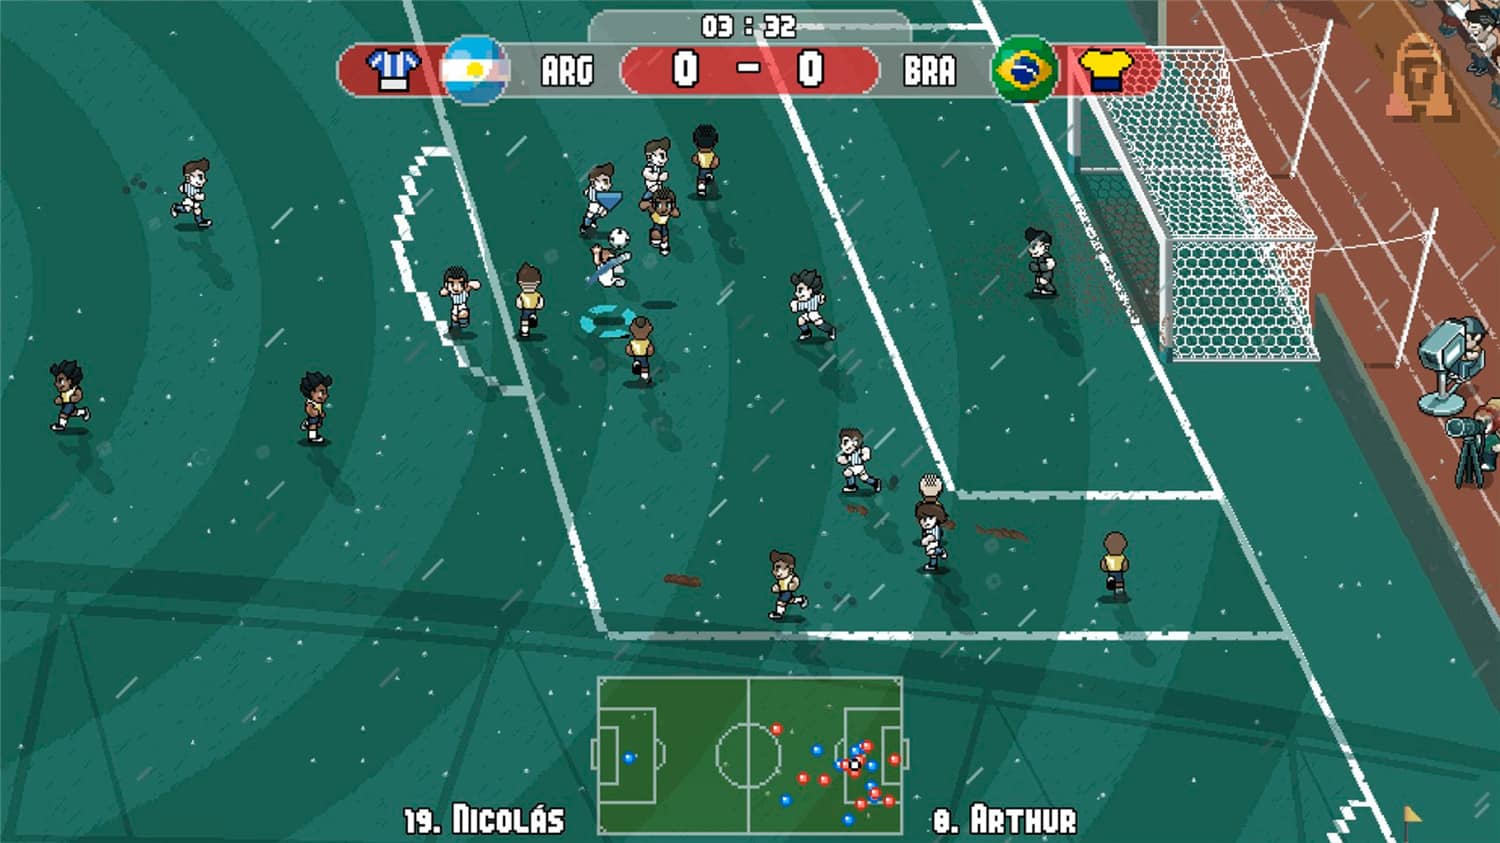 像素世界杯足球赛：终极版/Pixel Cup Soccer - Ultimate Edition